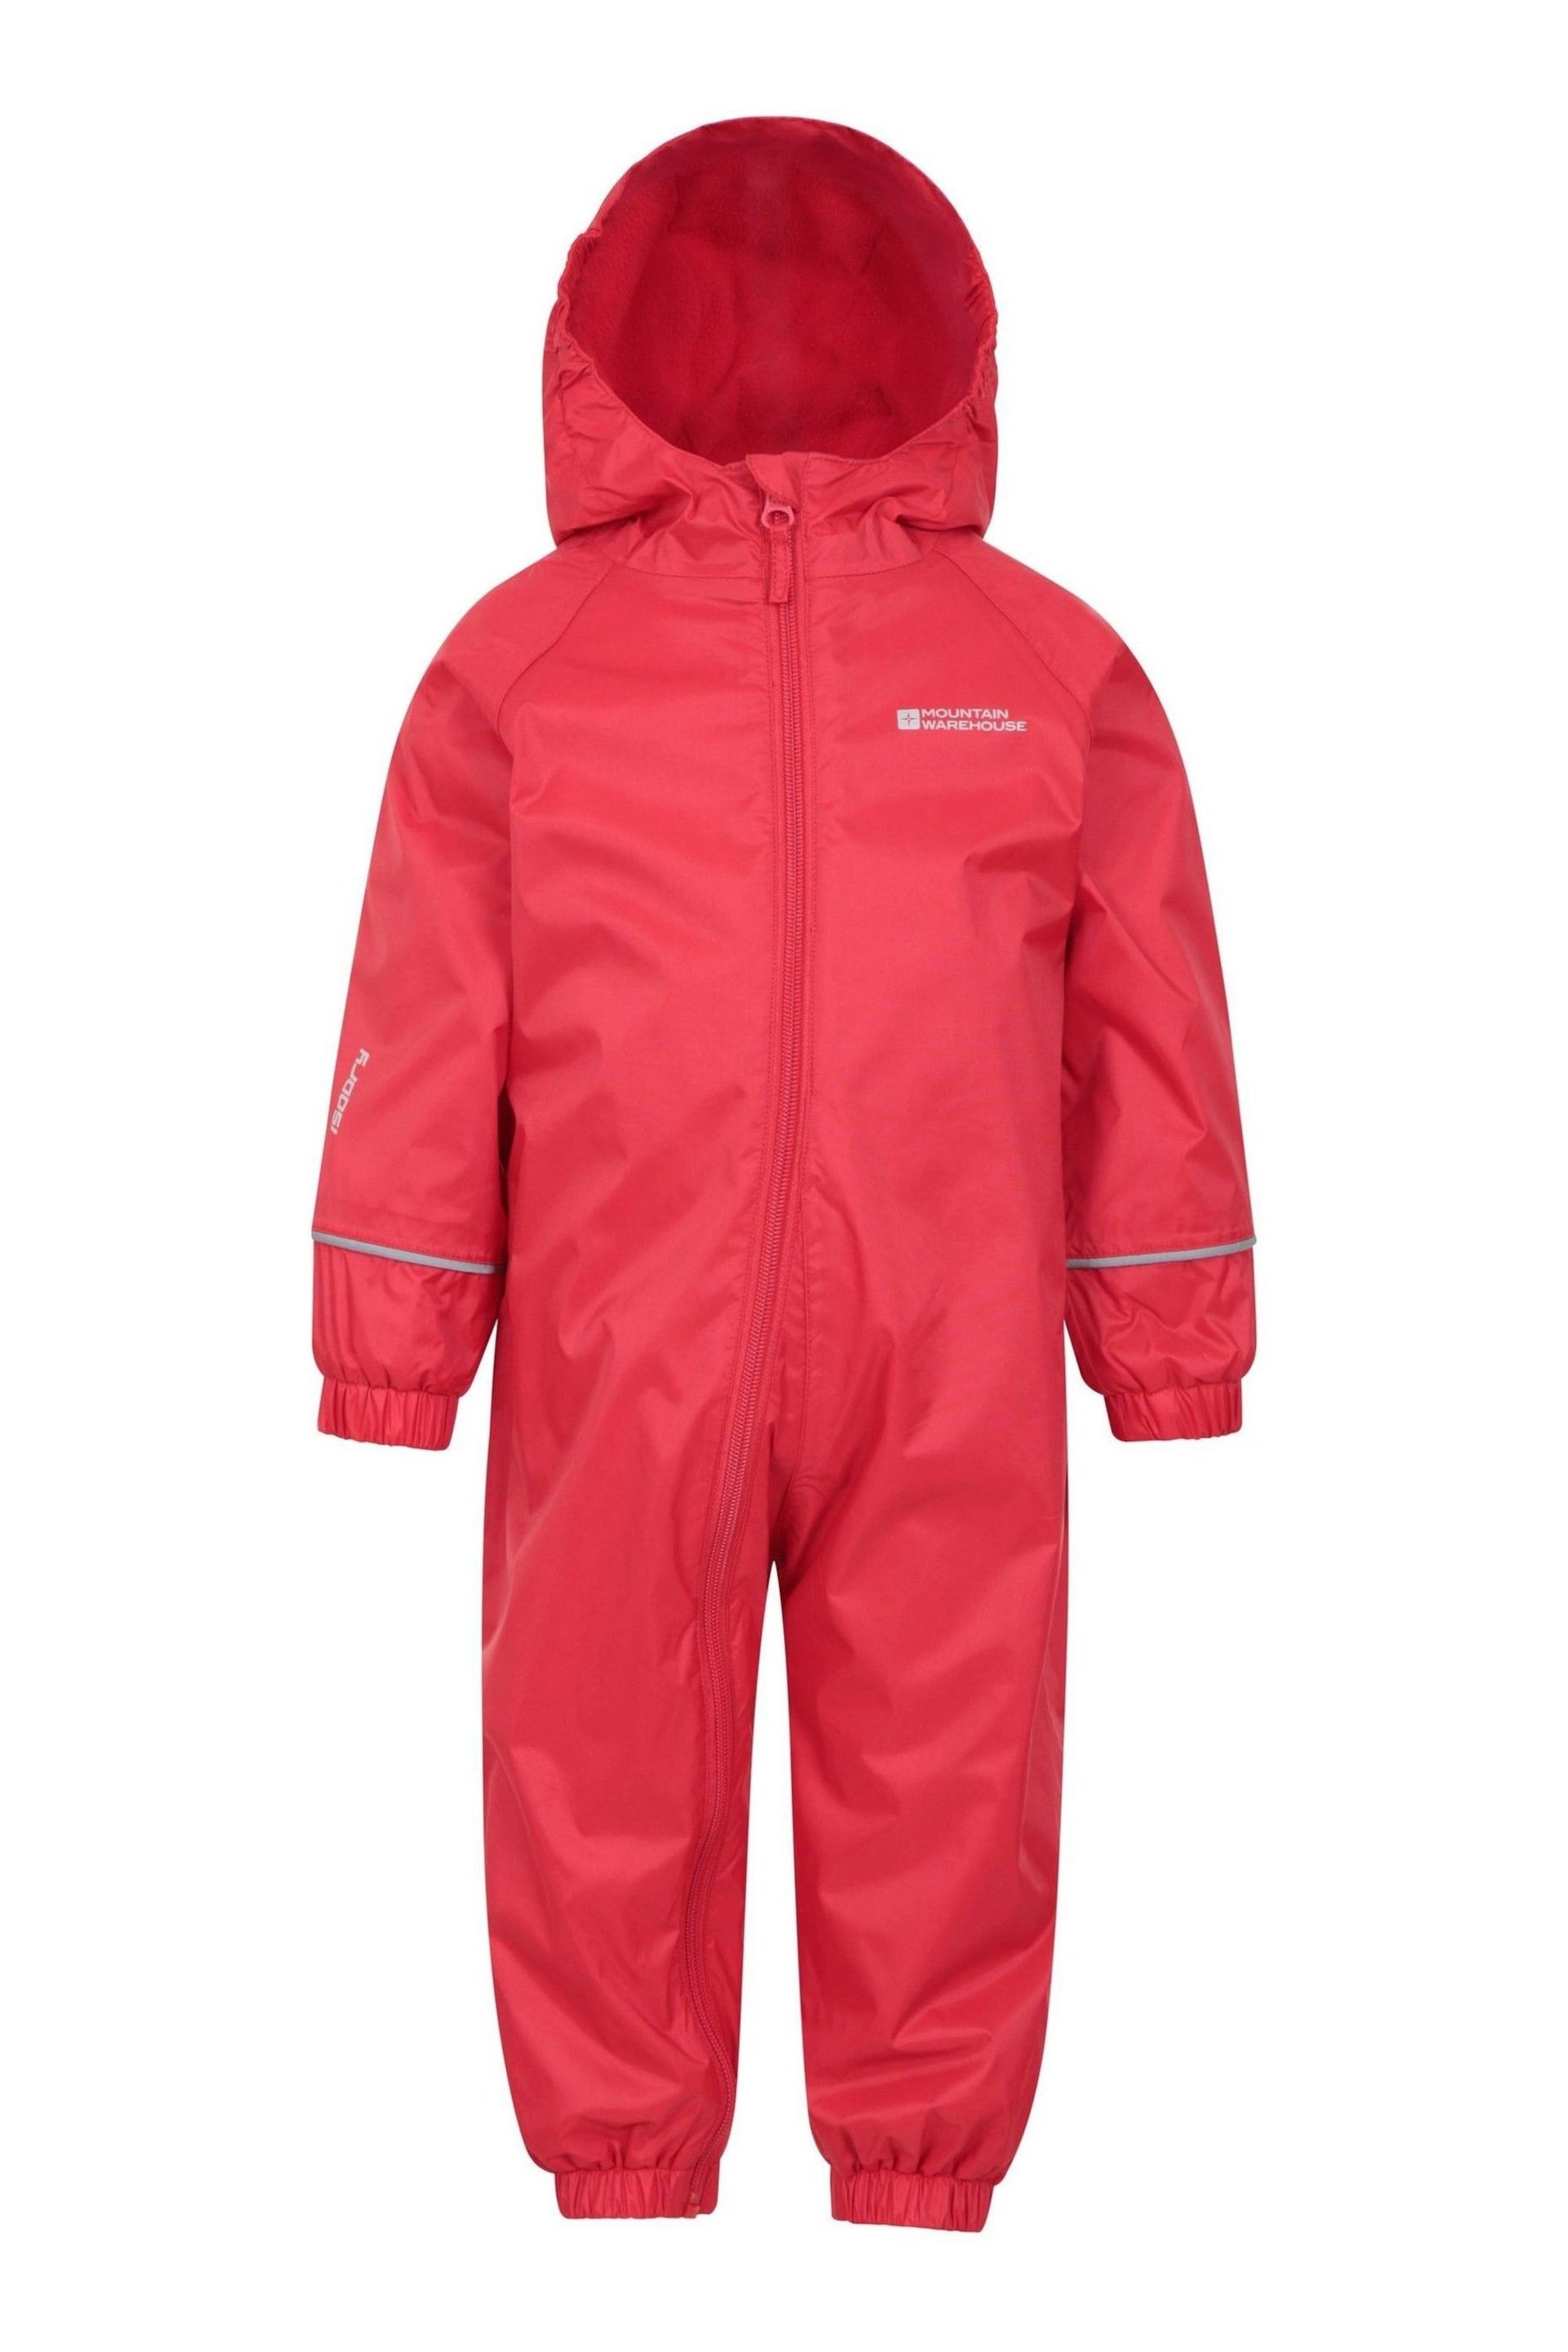 Mountain Warehouse Red Junior Spright Waterproof Fleece Lined Rainsuit - Image 1 of 5